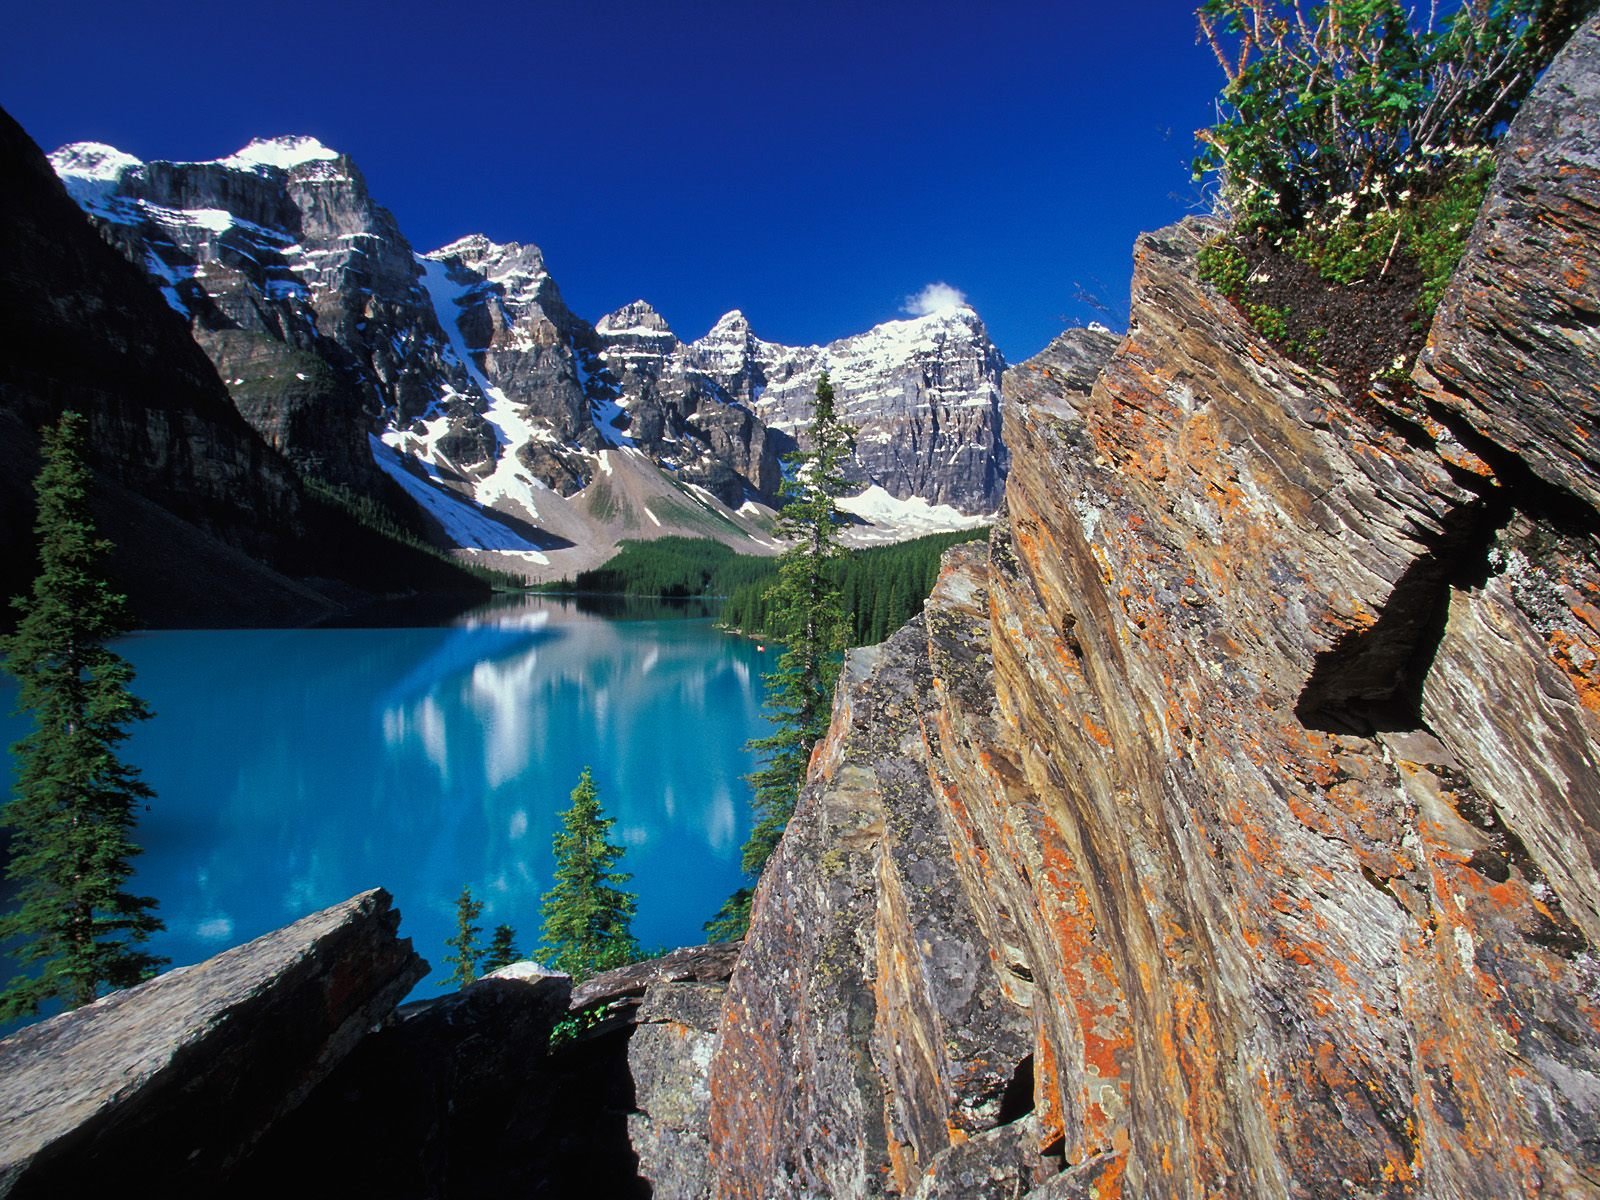  Ten Peaks Banff National Park Canada Wallpaper   HQ Wallpapers 1600x1200